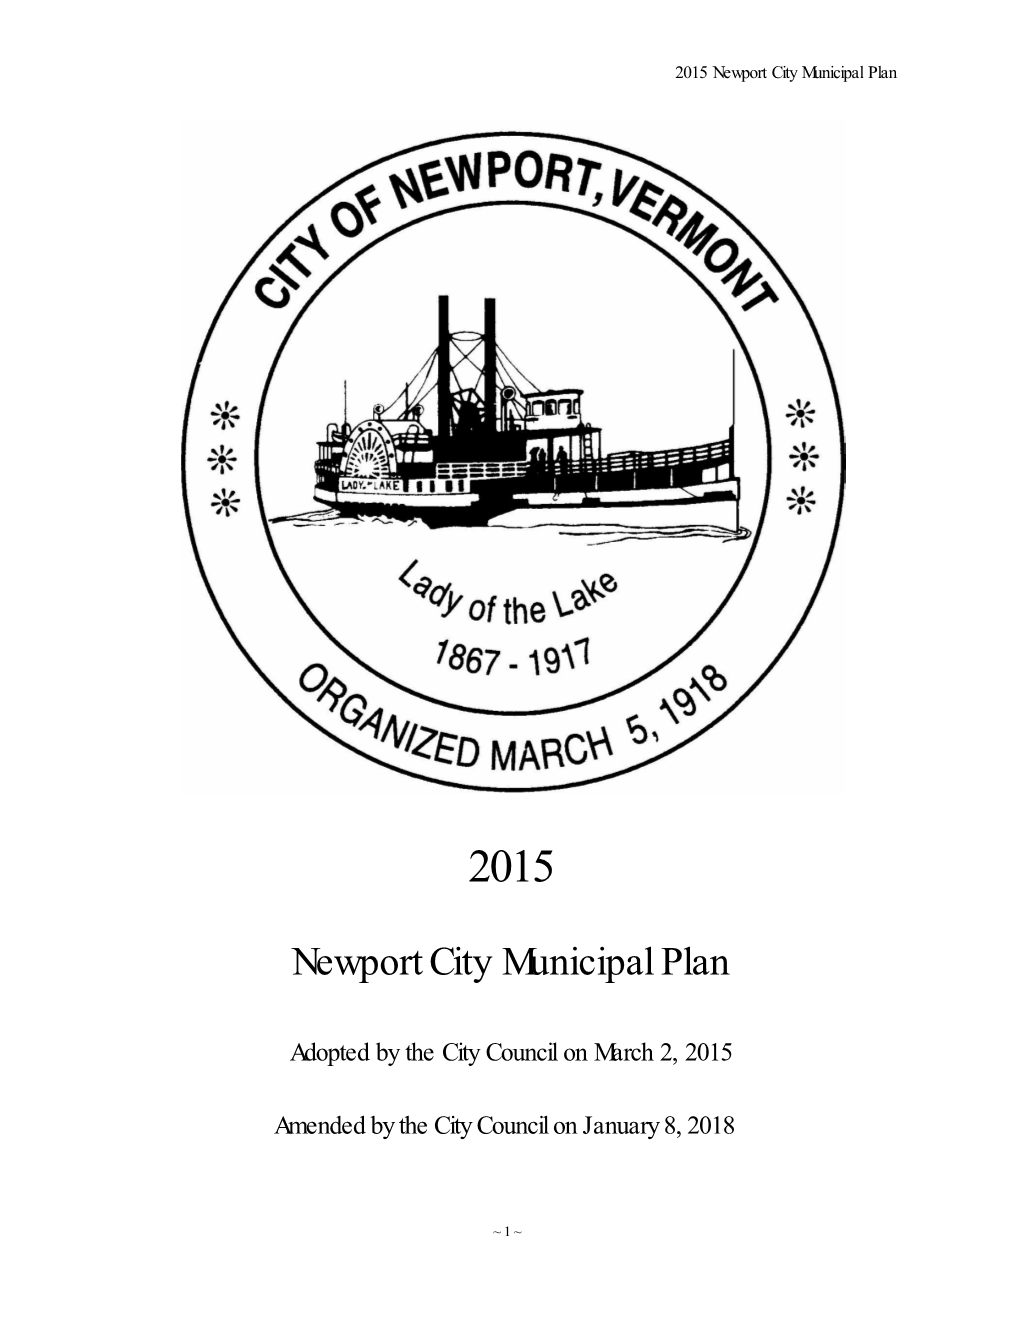 Newport City Municipal Plan